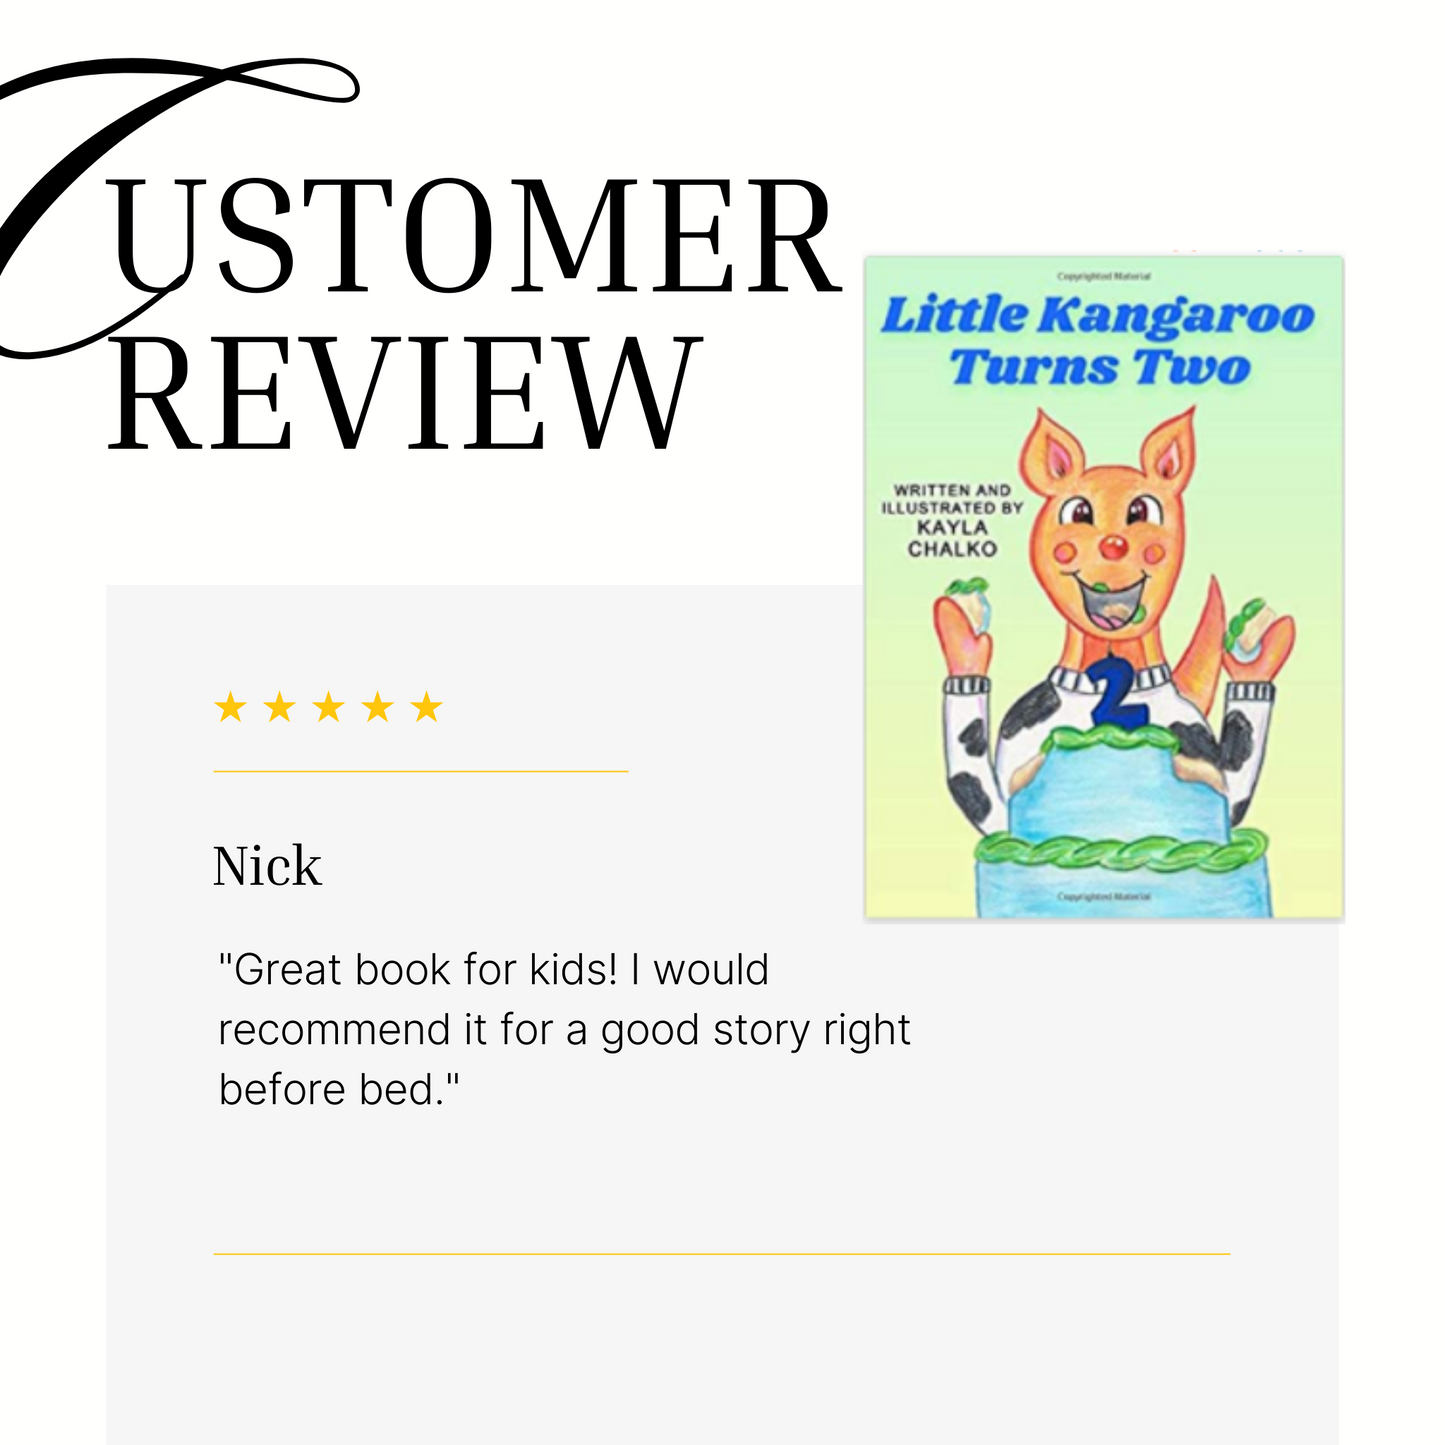 "Little Kangaroo Turns Two" Children's Book